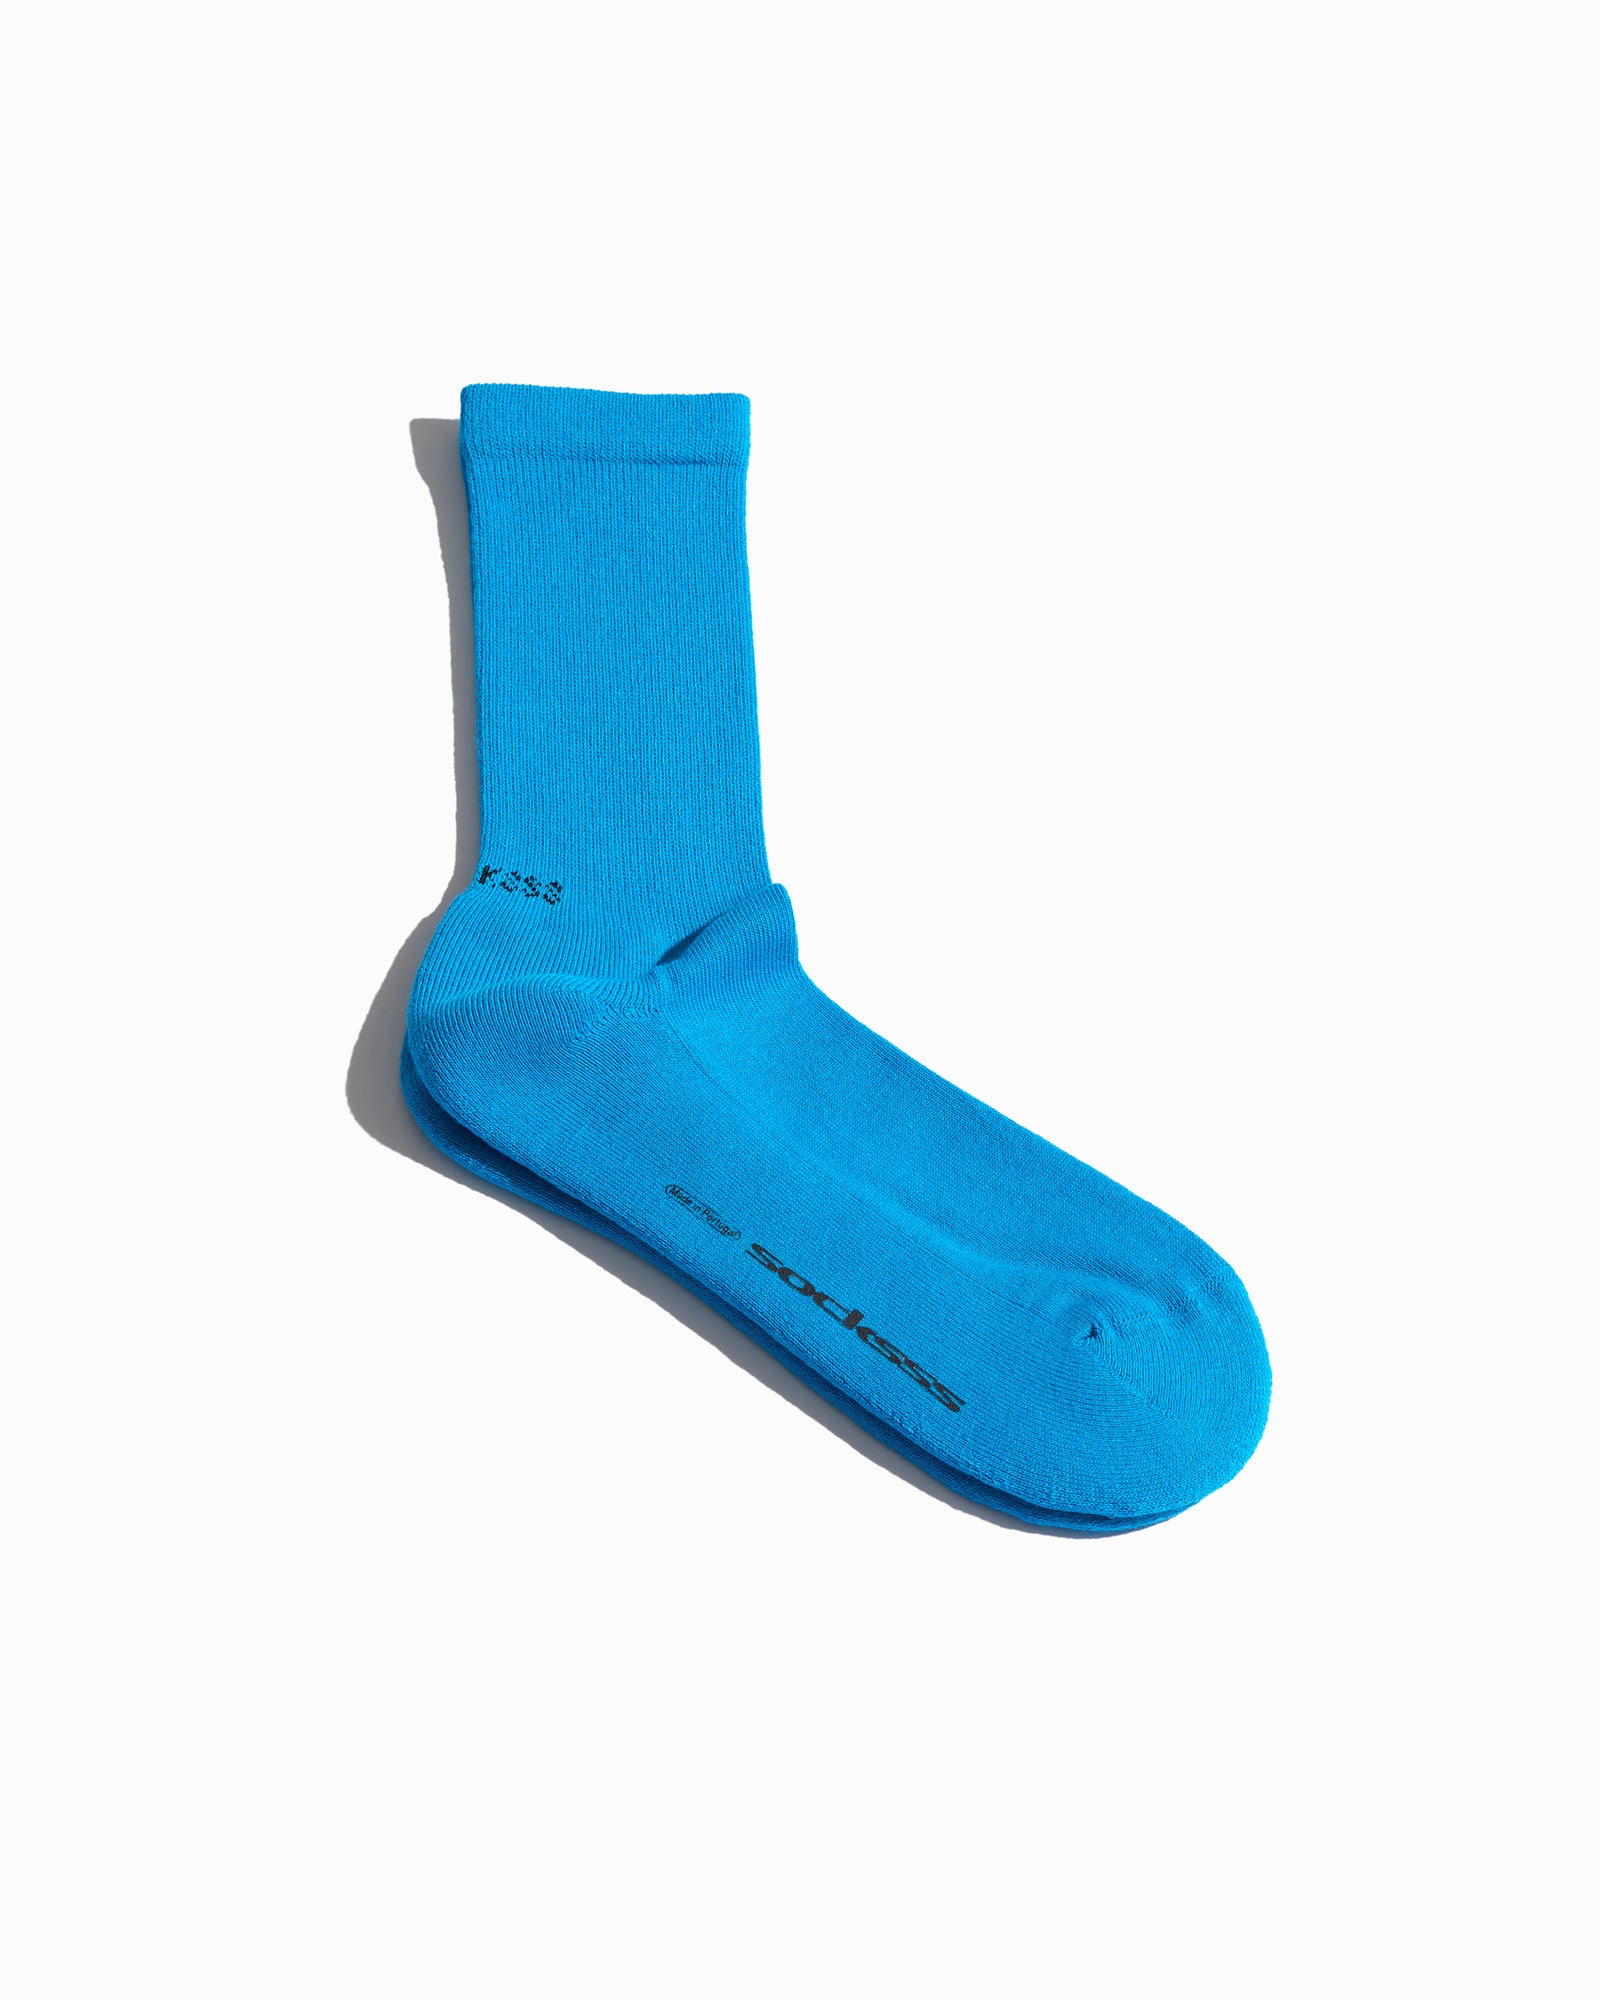 SOCKSSS Original Socks in Mega Blue